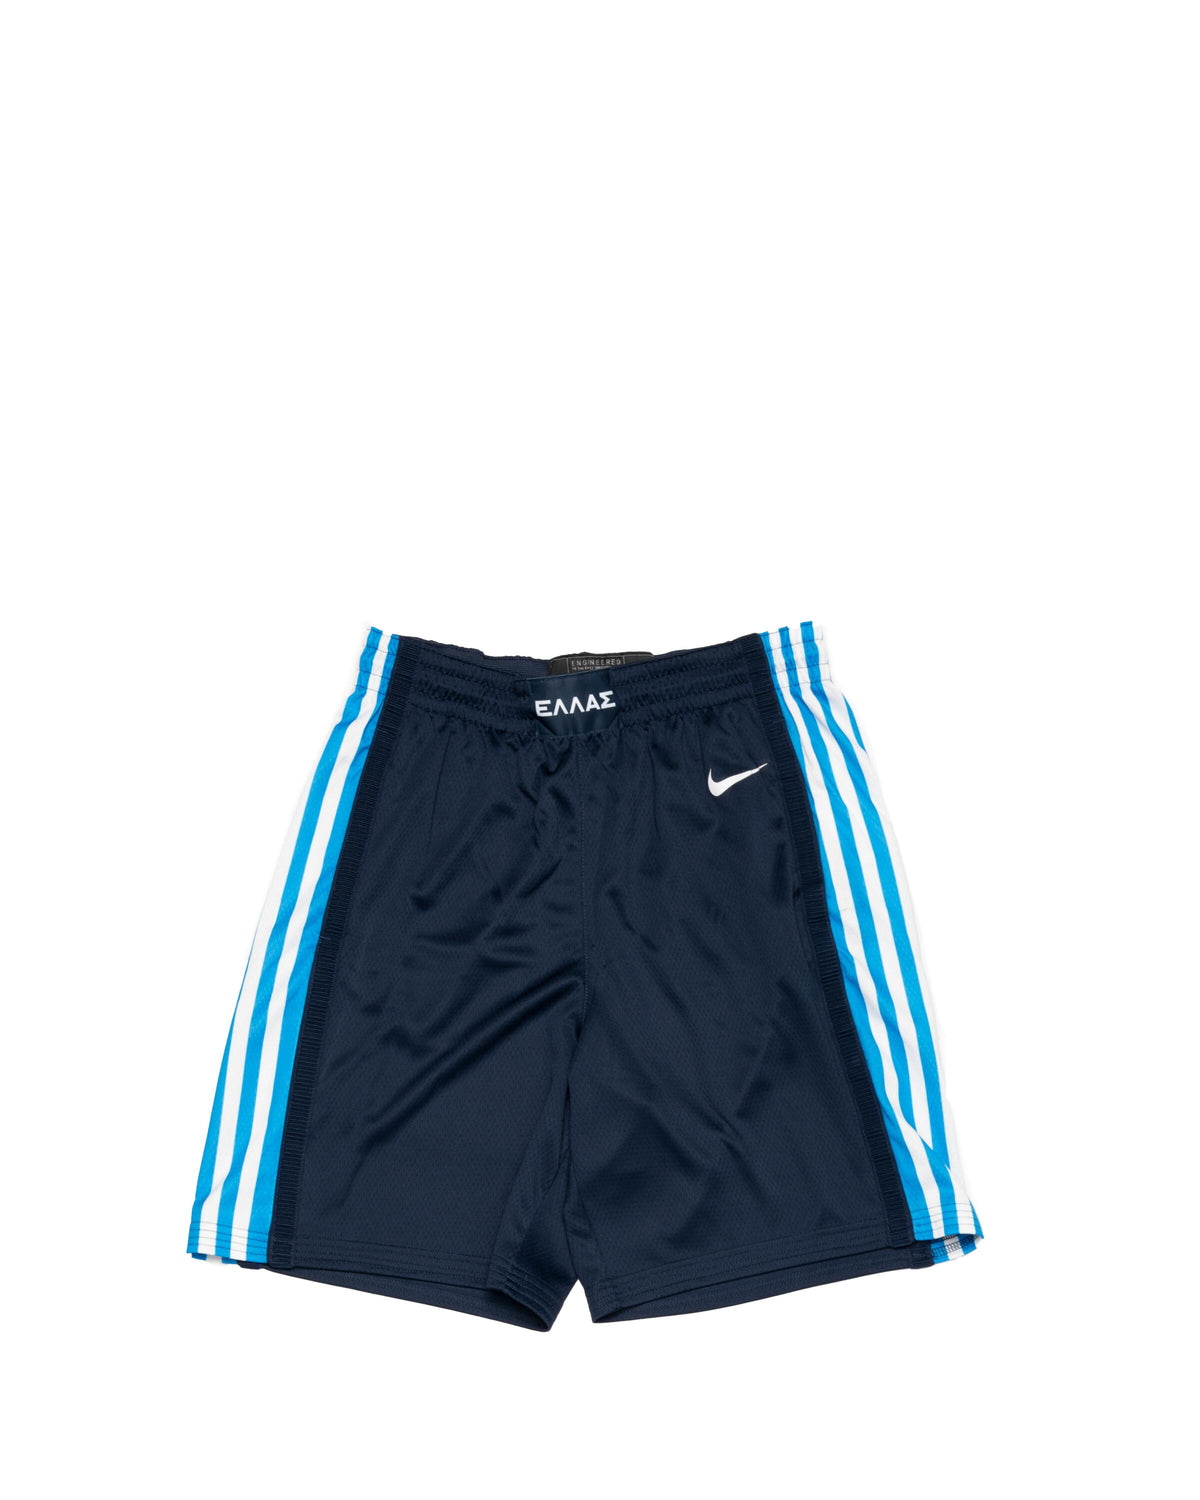 Nike Greece Limited Basketball Shorts